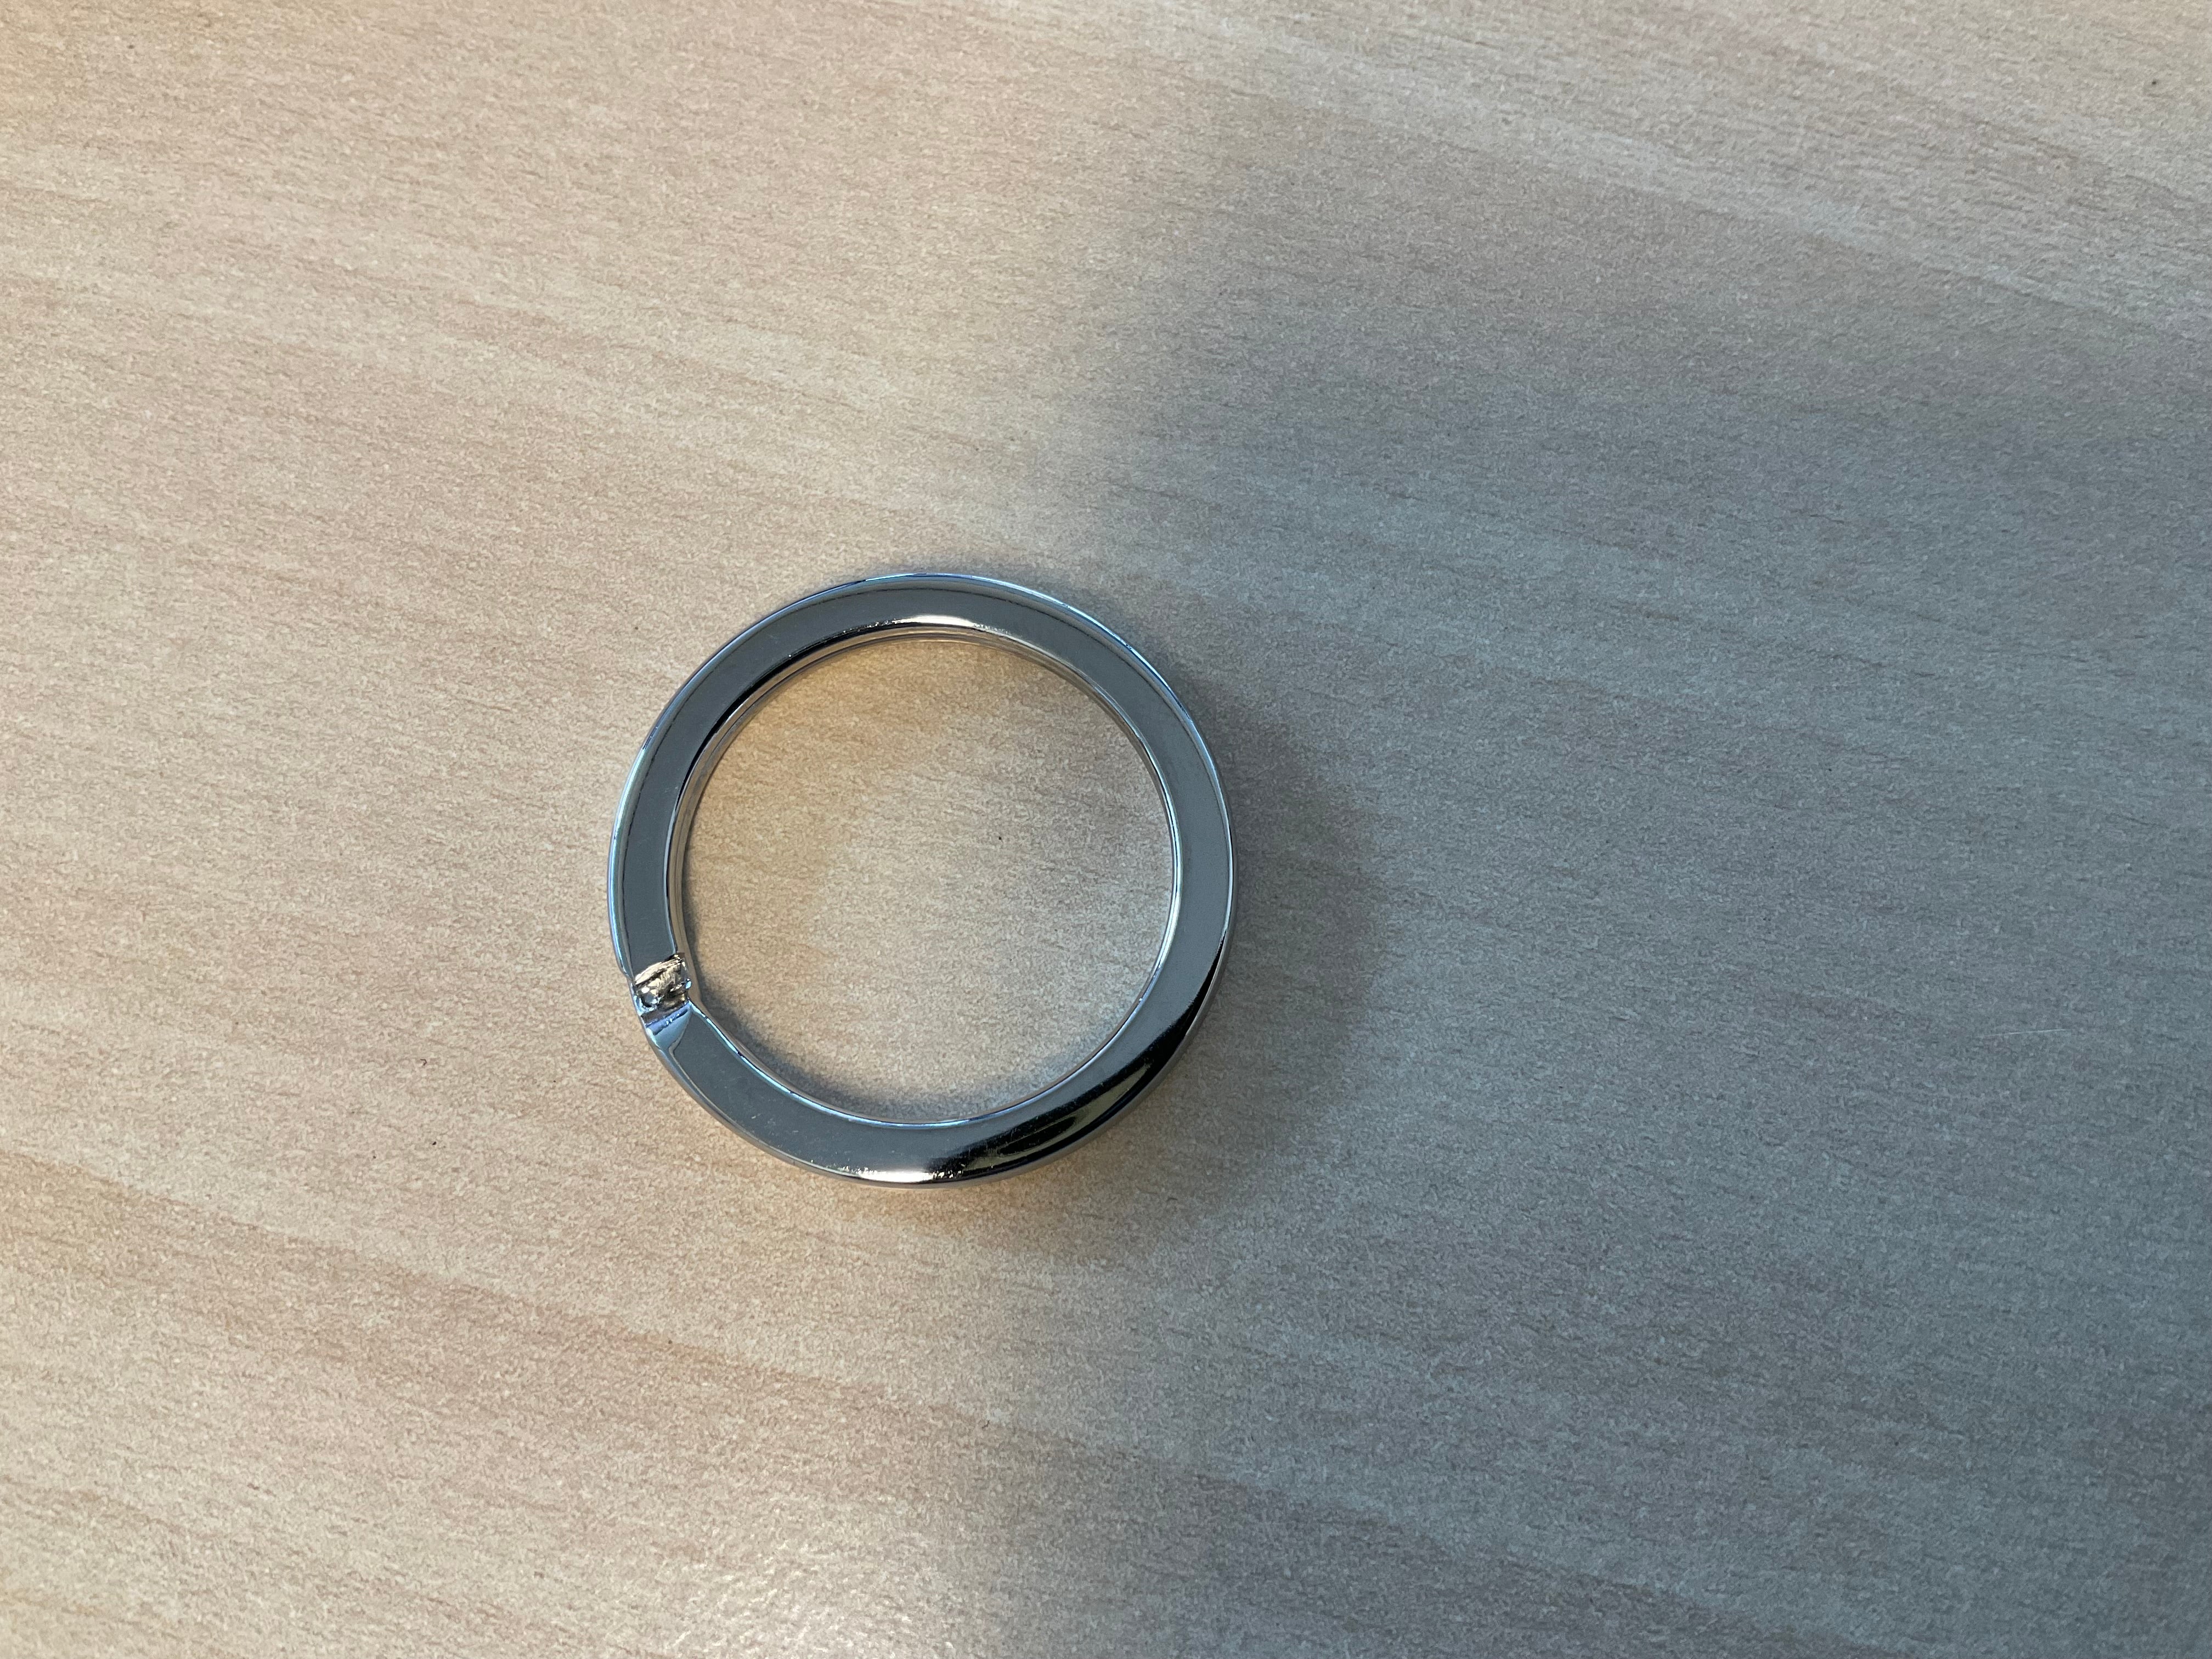 Metal key split ring nikkel (only the ring)